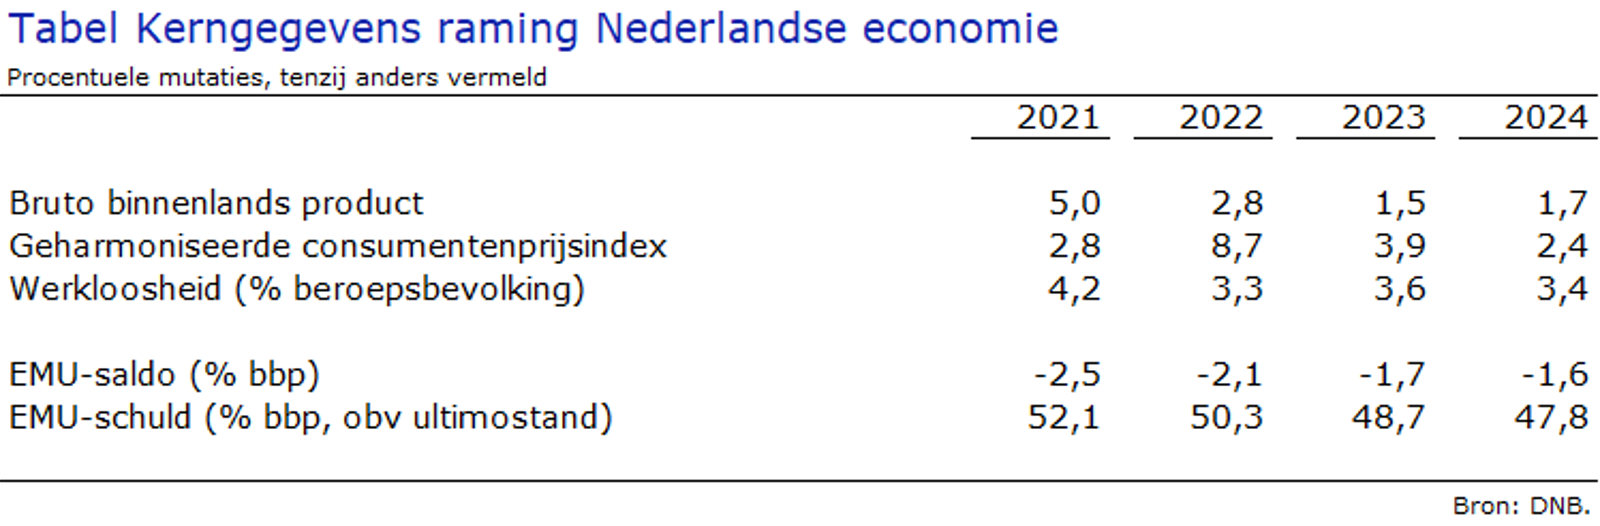 Tabel Kerngegevens Raming NL Economie